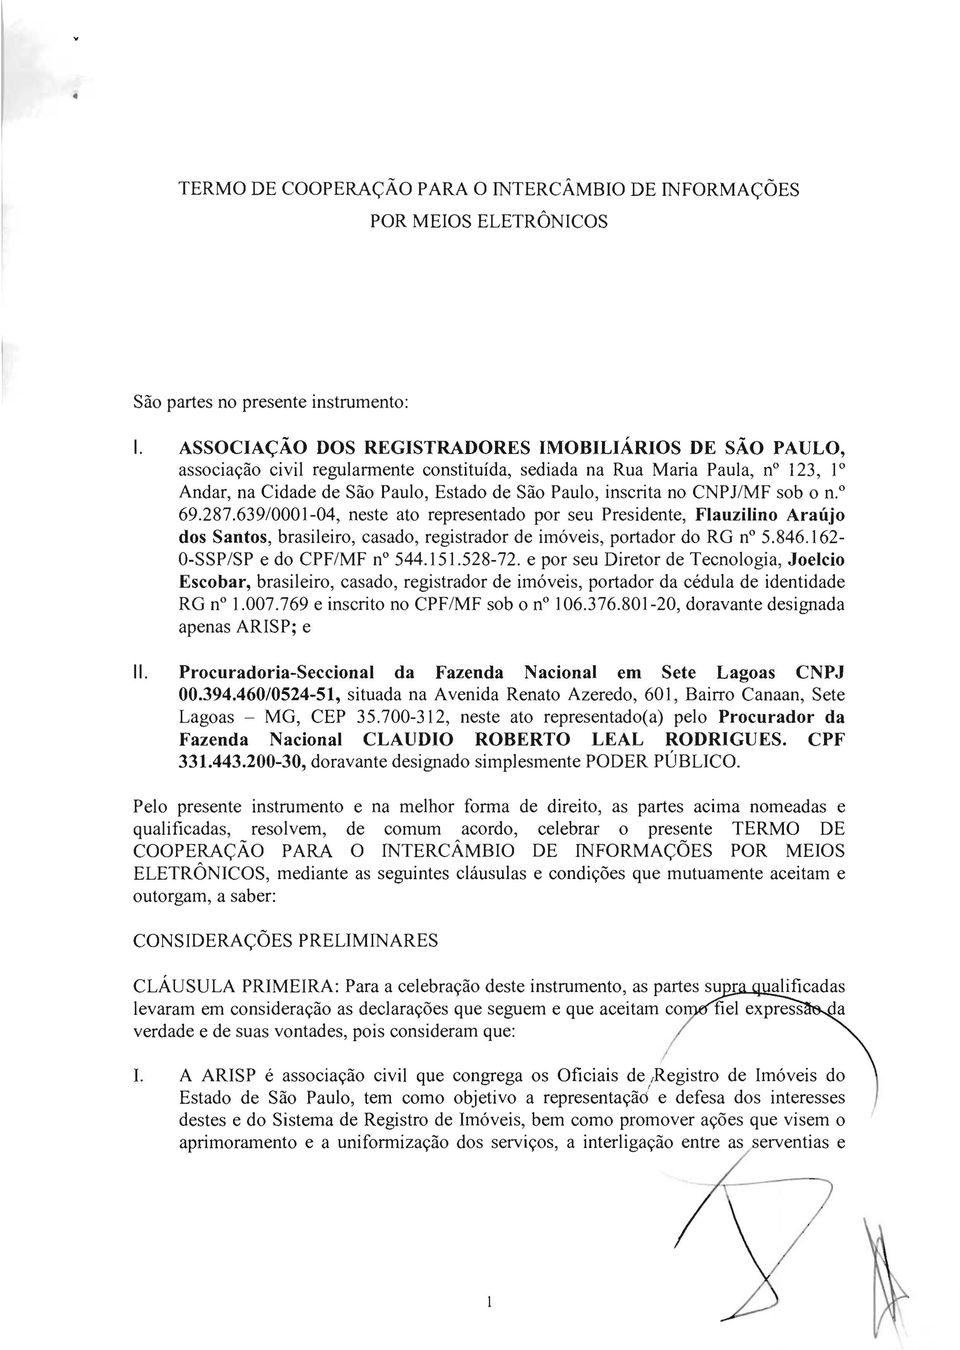 CNPJIMF sob o n.o 69.287.639/0001-04, neste ato representado por seu Presidente, Flauzilino Araújo dos Santos, brasileiro, casado, registrador de imóveis, portador do RO n 5.846.